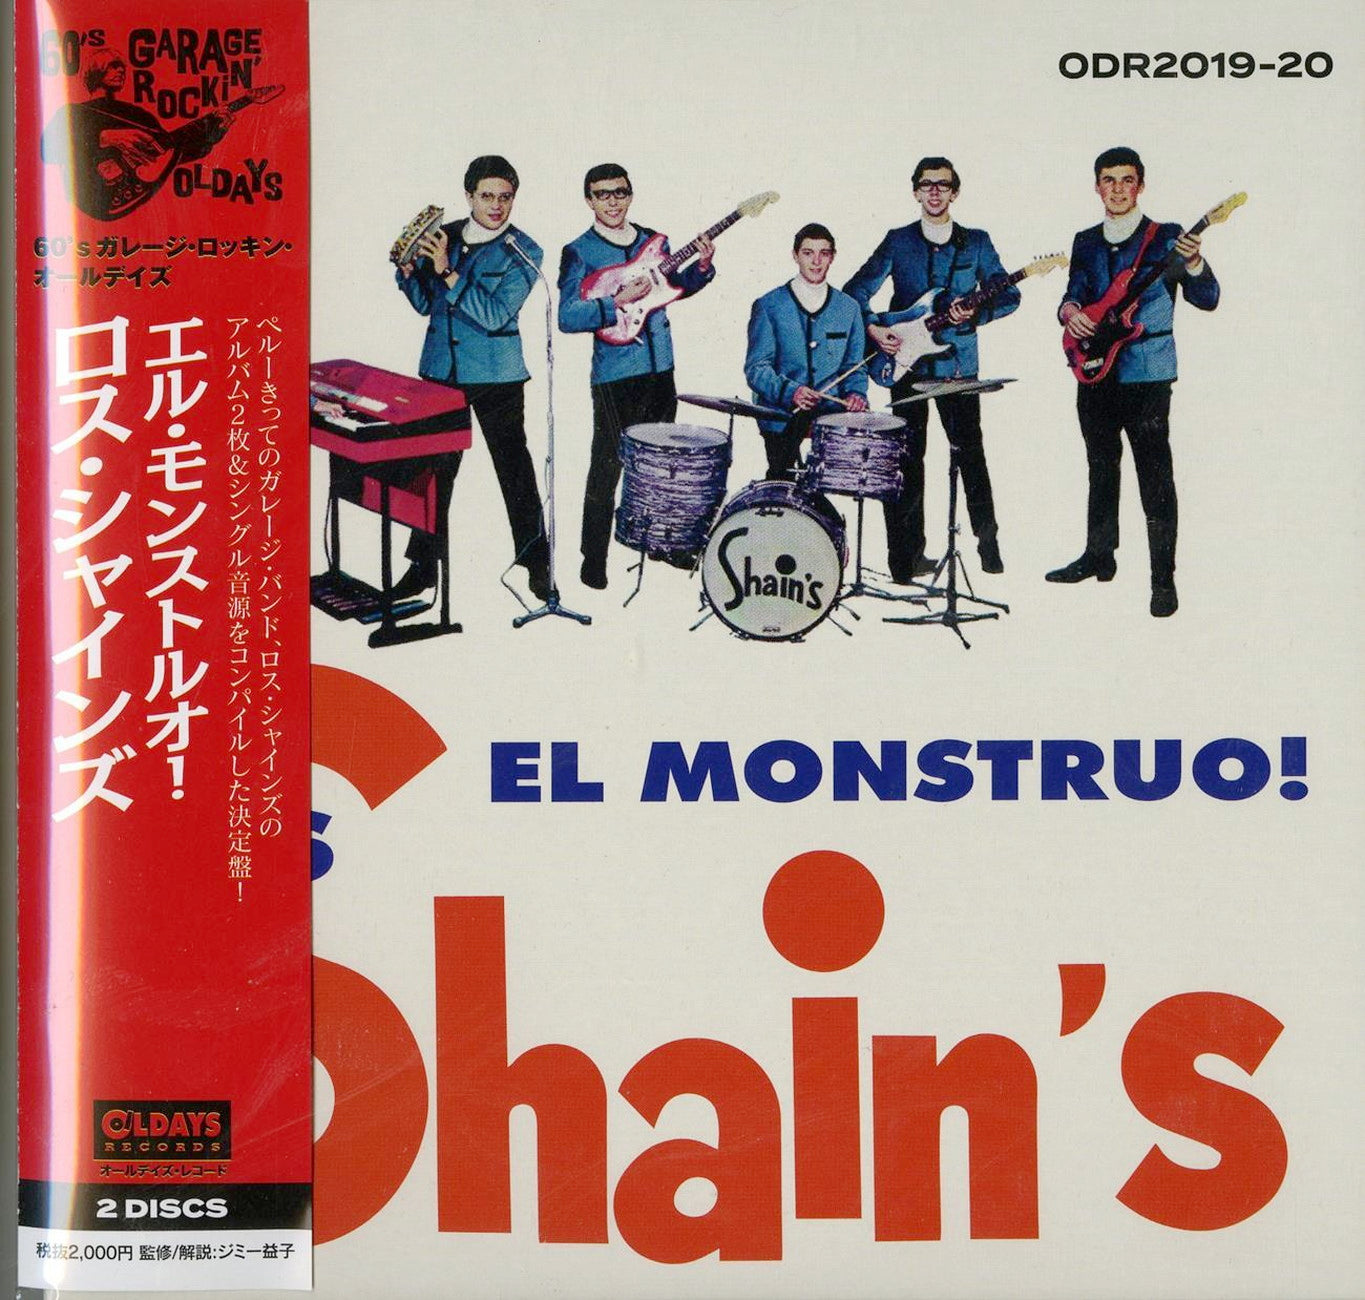 Los Shain'S - El Monstruo! - Japan 2 Mini LP CD – CDs Vinyl Japan